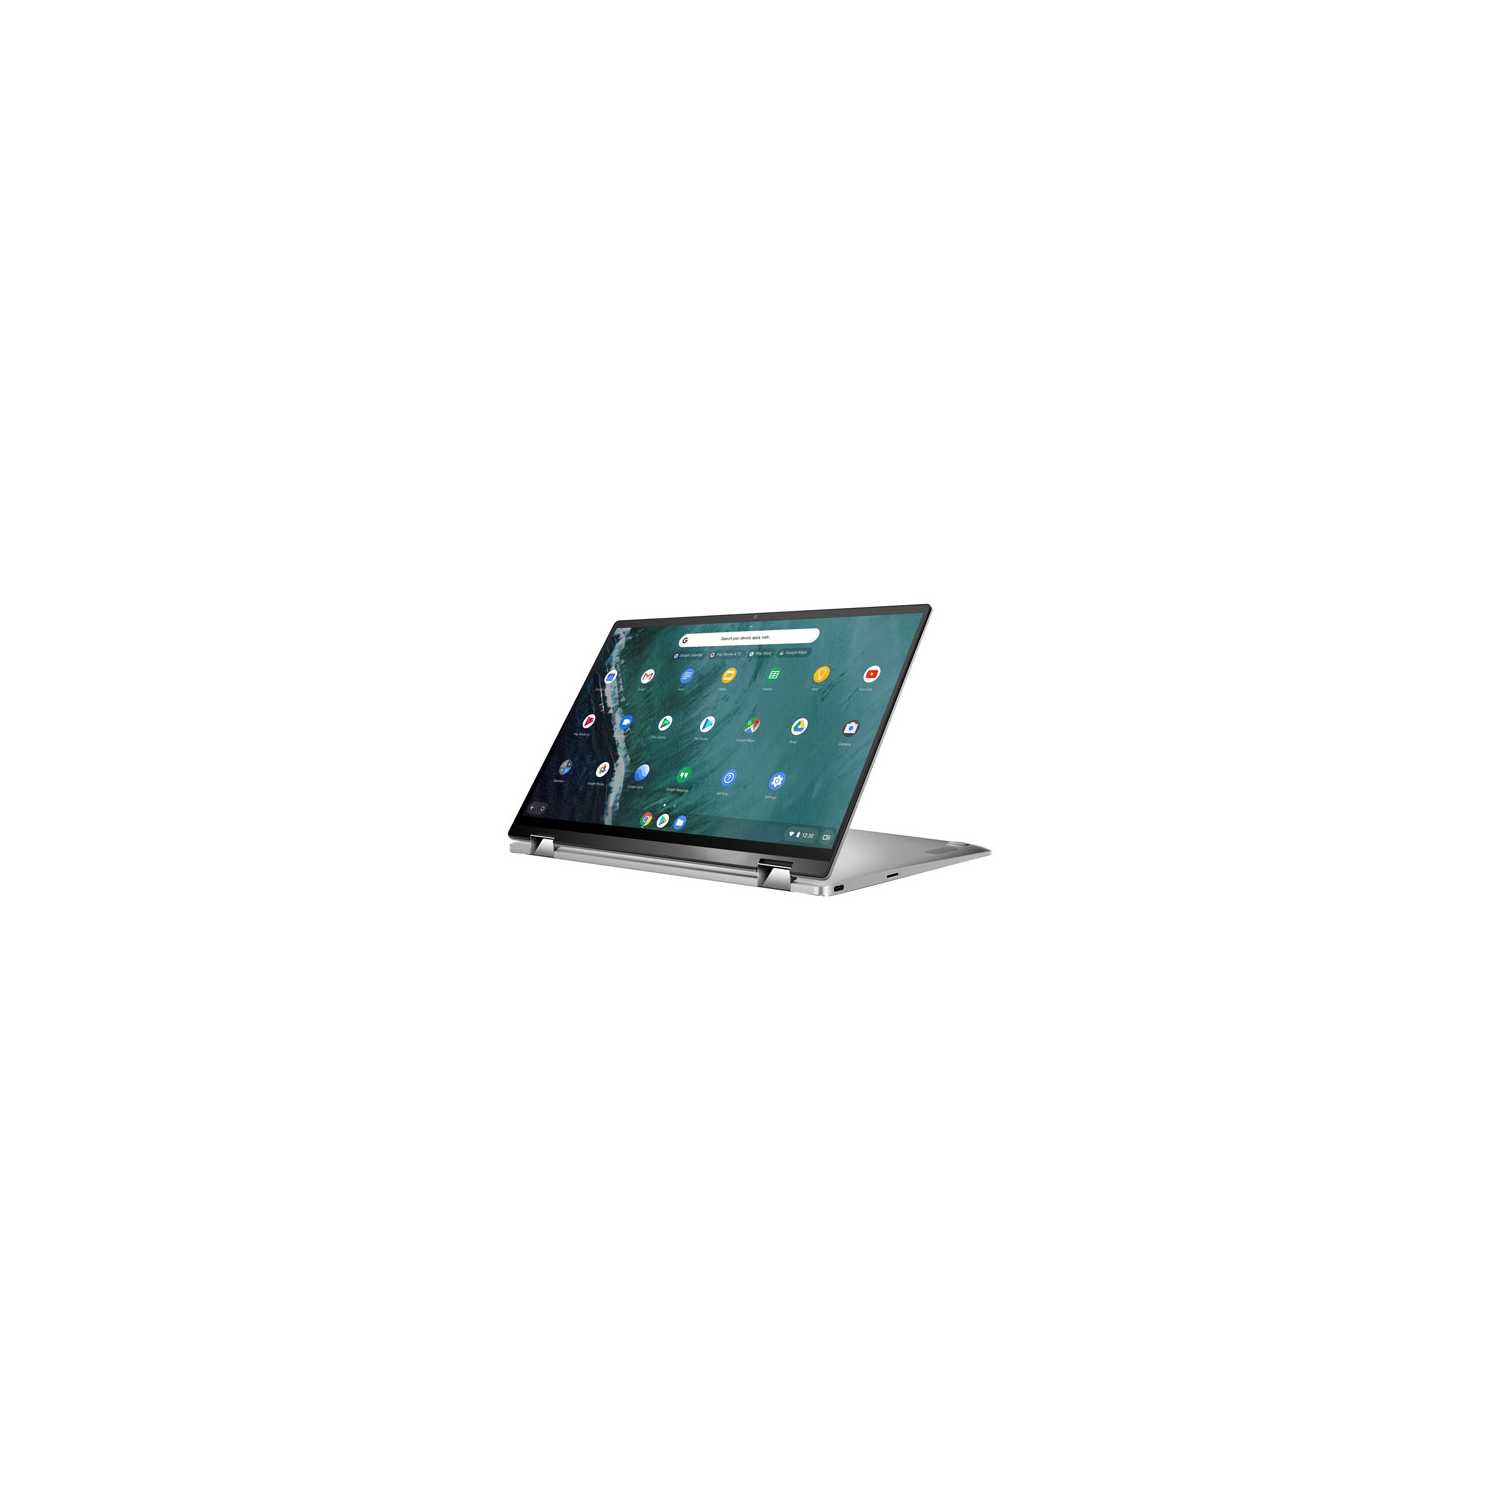 Refurbished (Good) - ASUS Chromebook Flip 14" Touchscreen 2-in-1 Laptop (Intel Cm3-8100Y/64GB eMMC/4GB RAM/Chrome OS) Eng